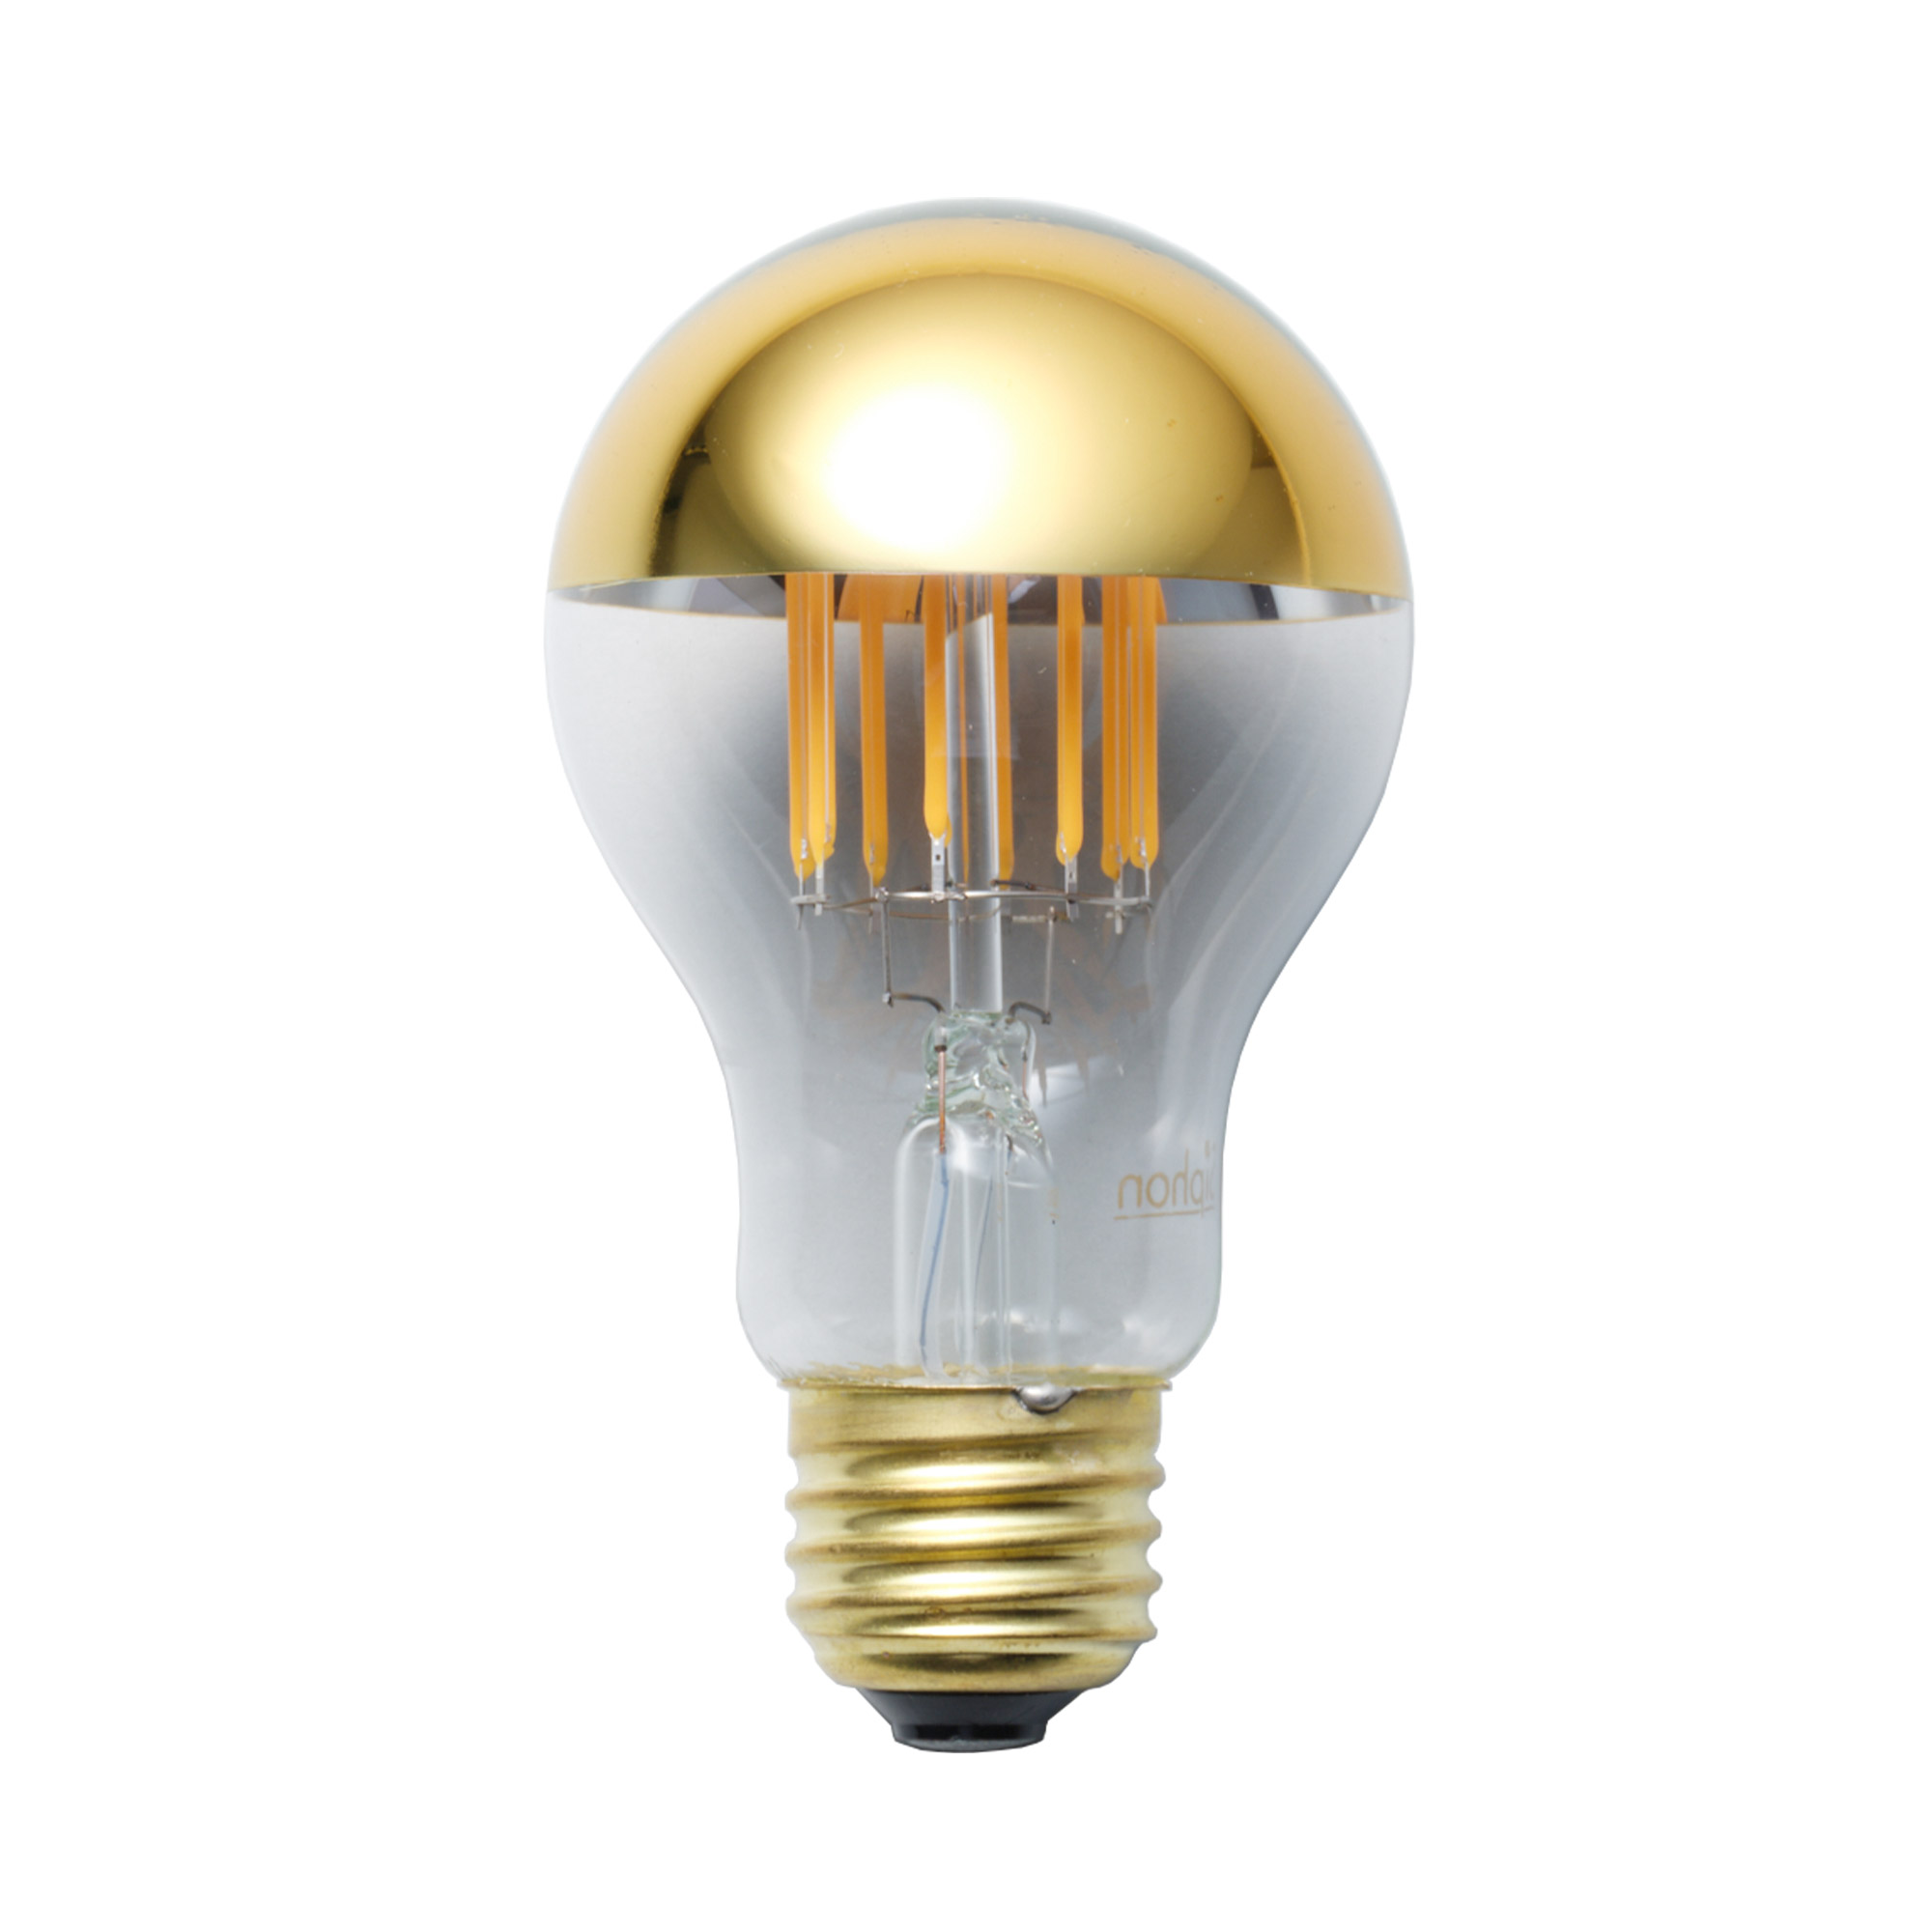 ミラーLED電球 φ60(E26)45W相当 ゴールド 2700K電球色 LT-BB007-04-G141